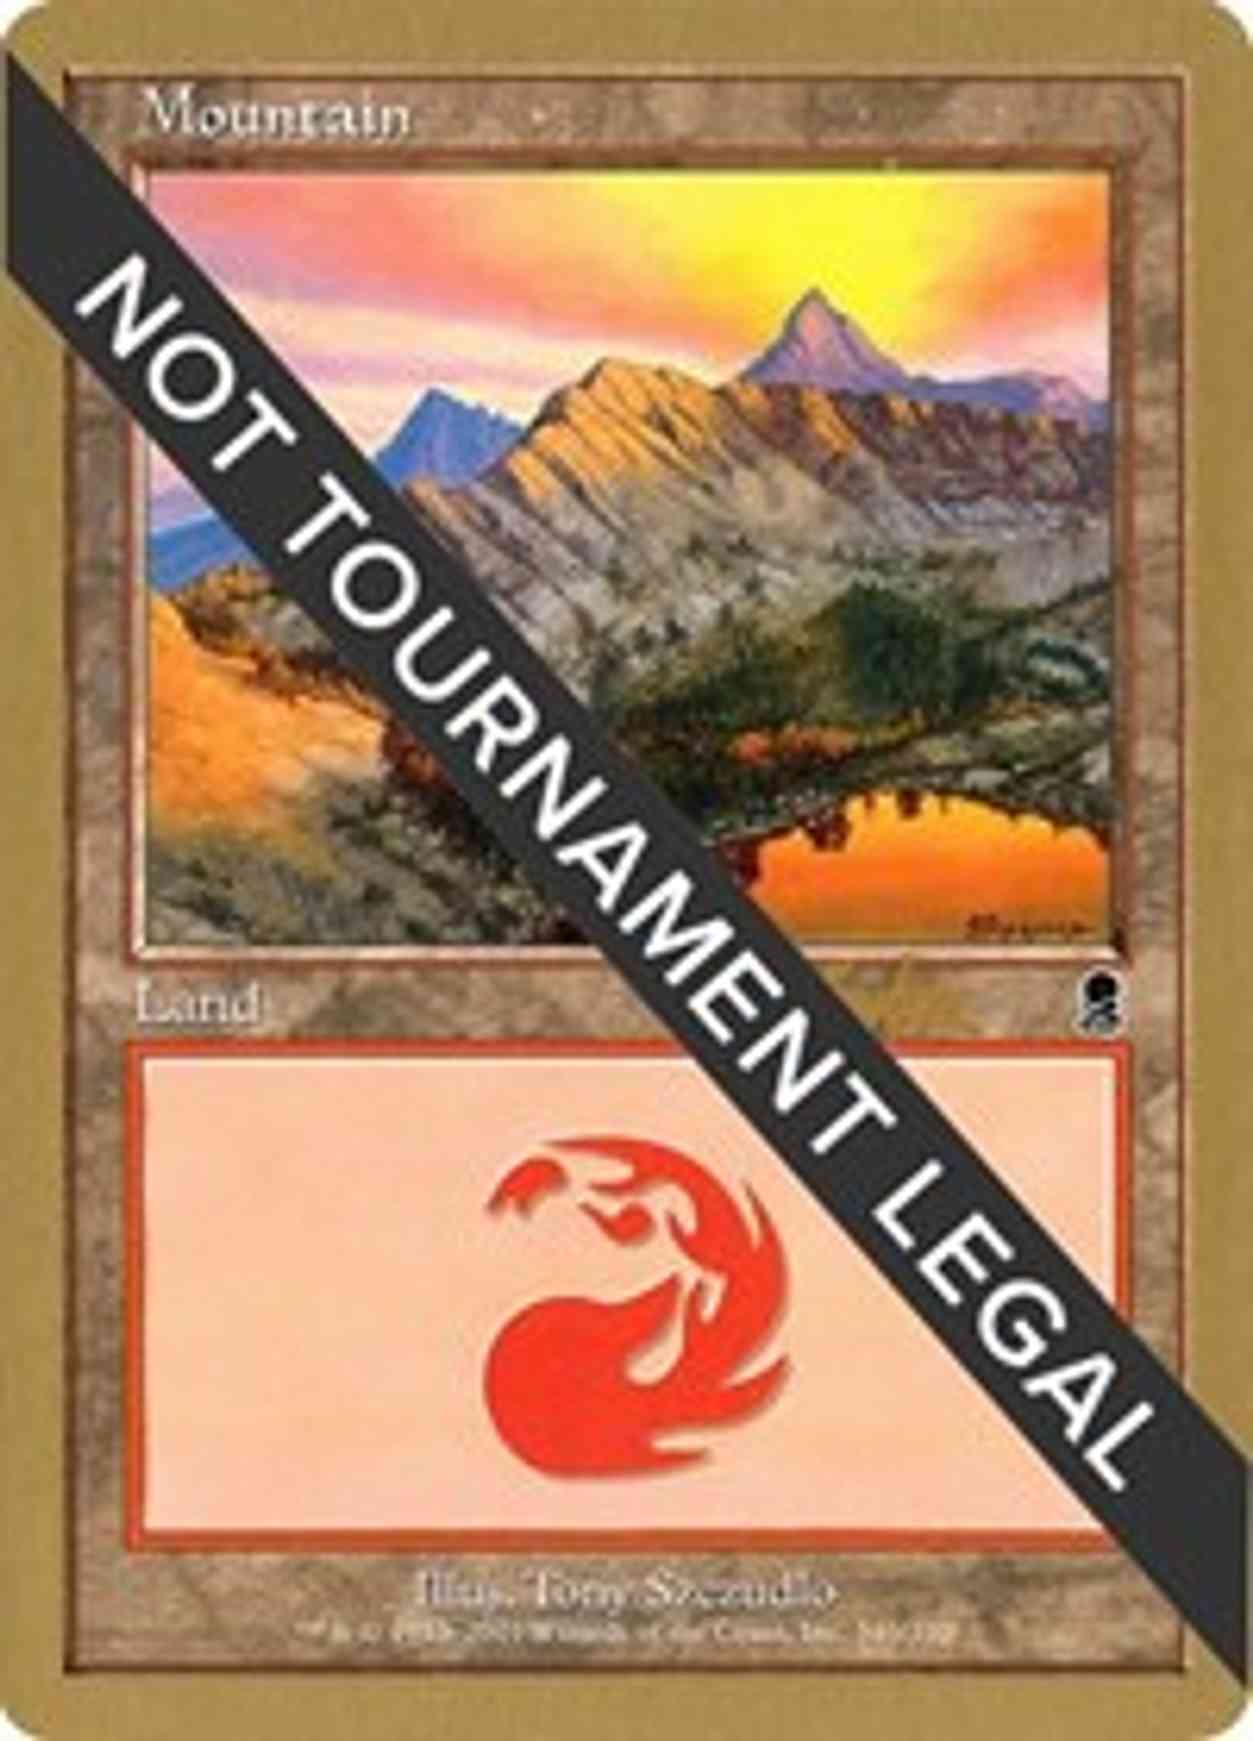 Mountain (346) - 2002 Brian Kibler (ODY) magic card front